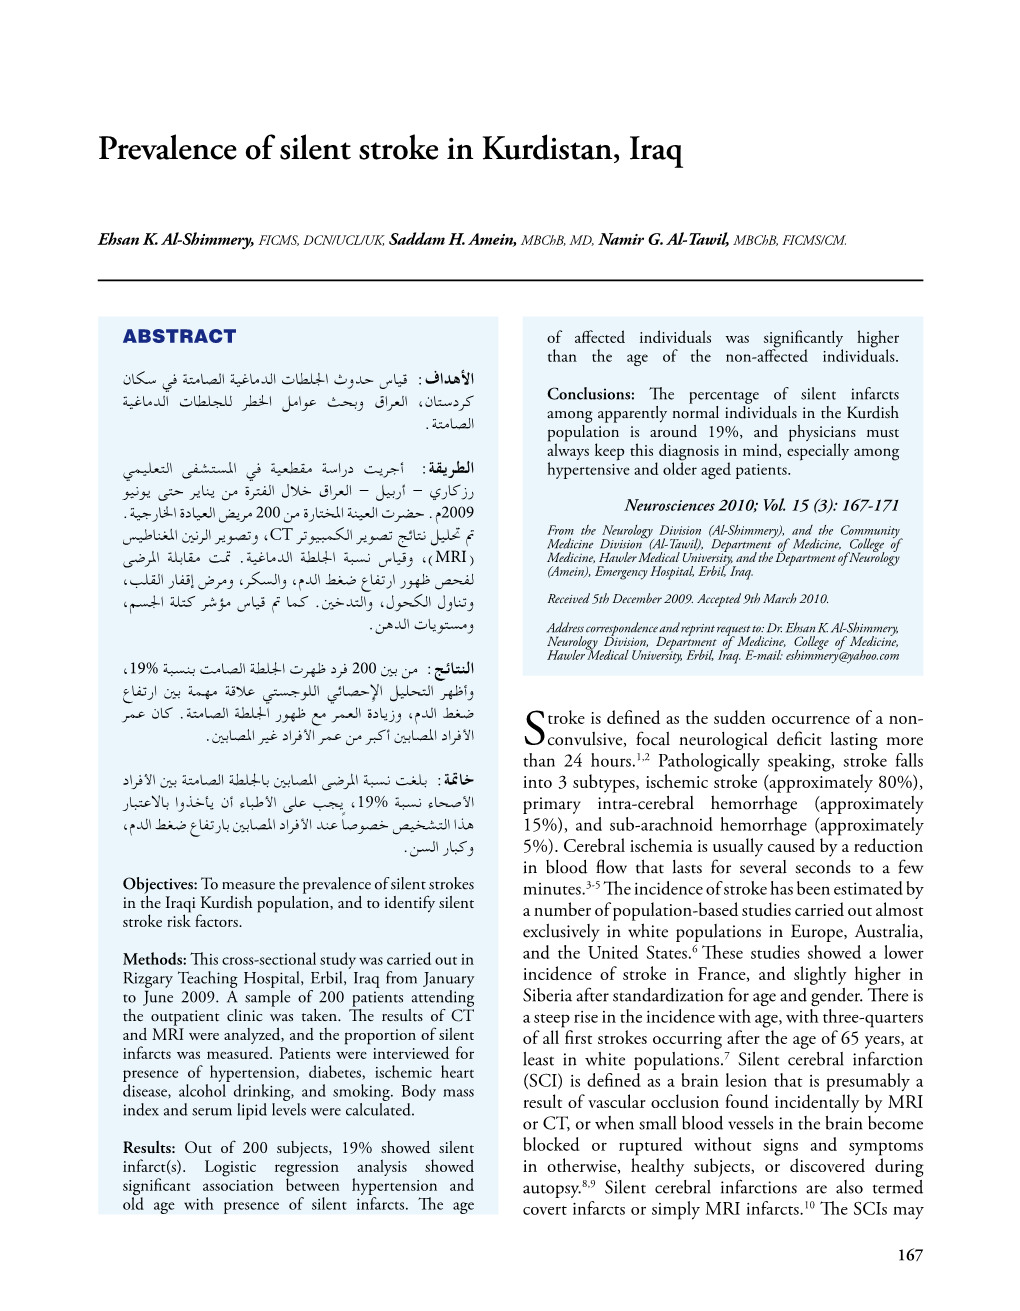 Prevalence of Silent Stroke in Kurdistan, Iraq